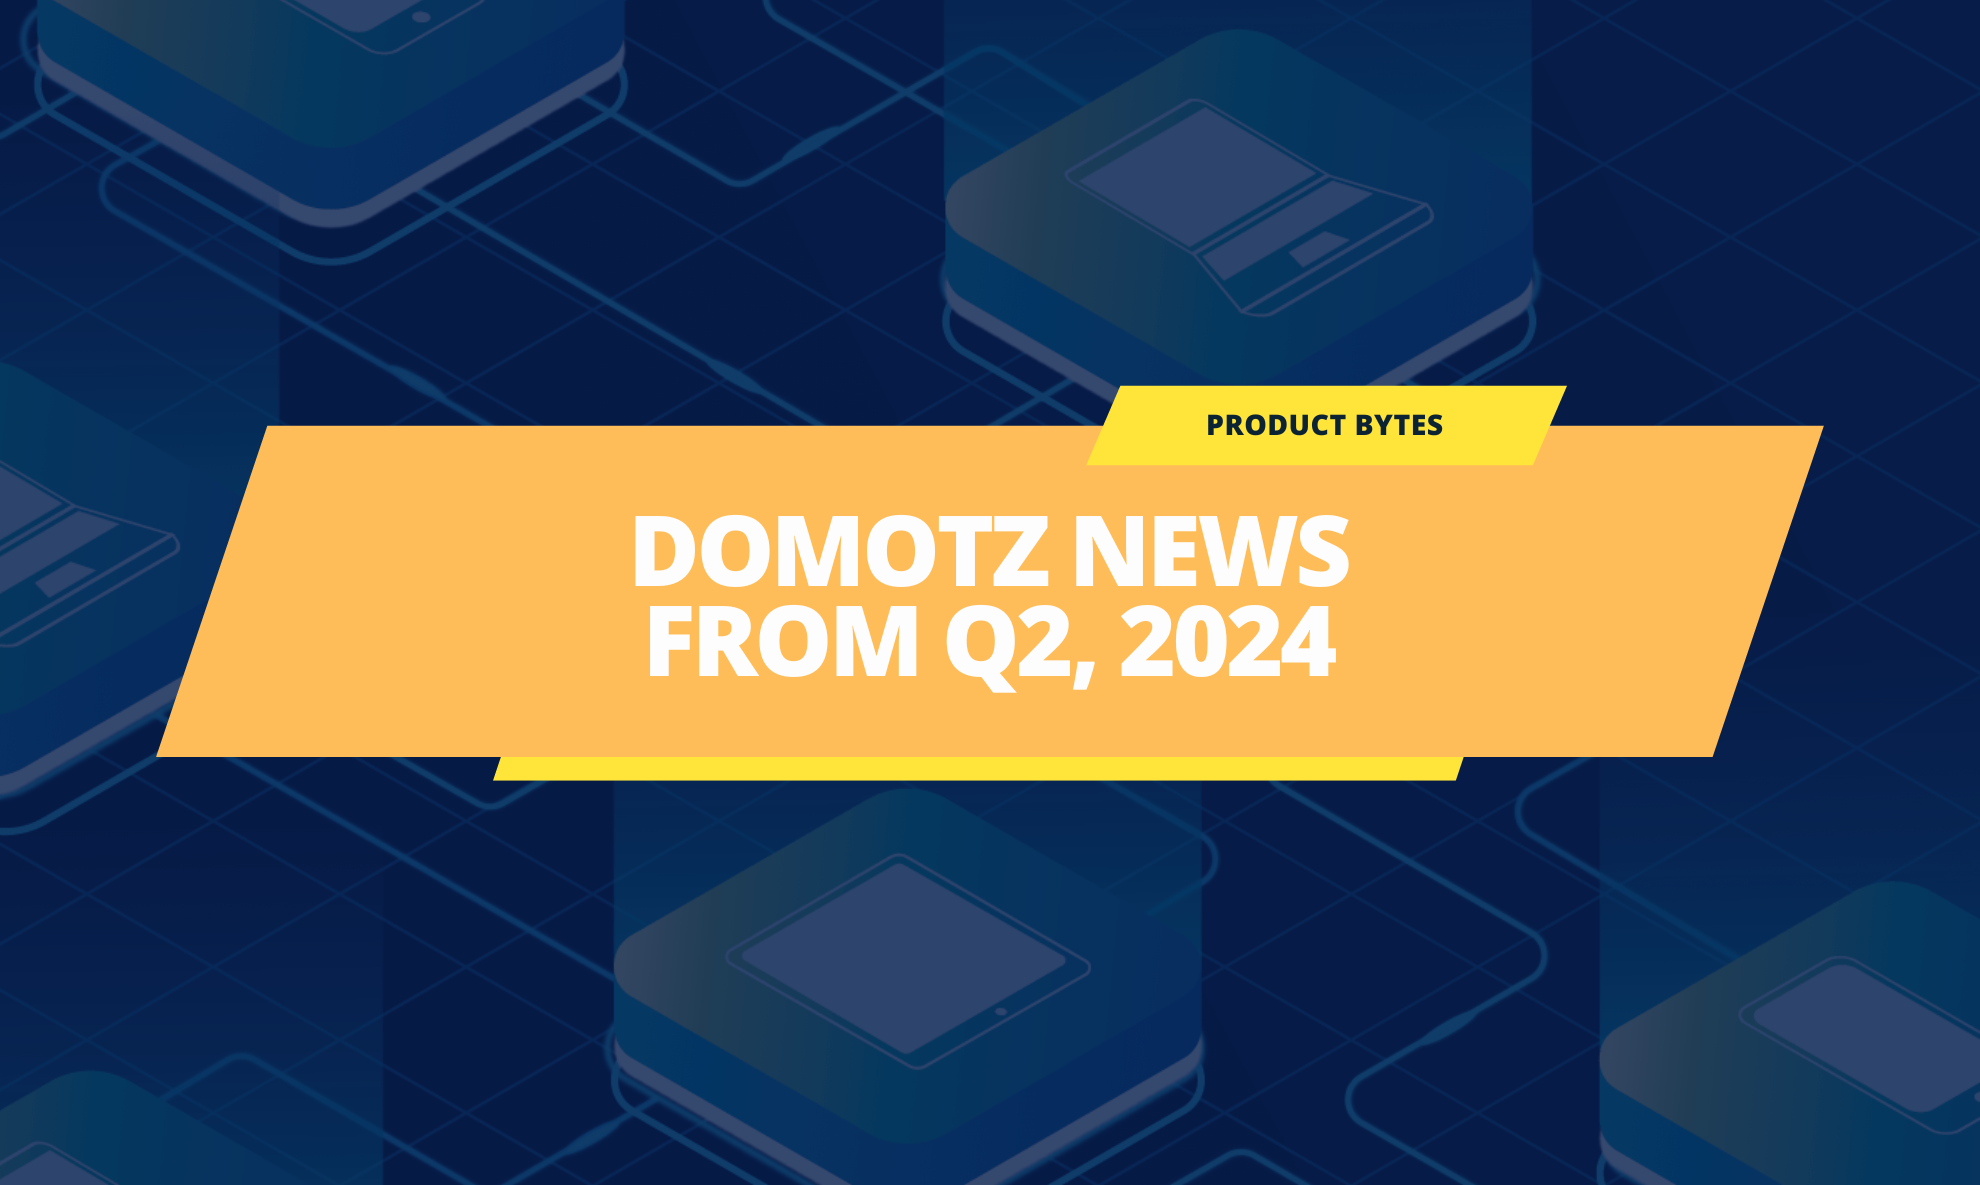 Domotz News From Q2 (April-June) 2024